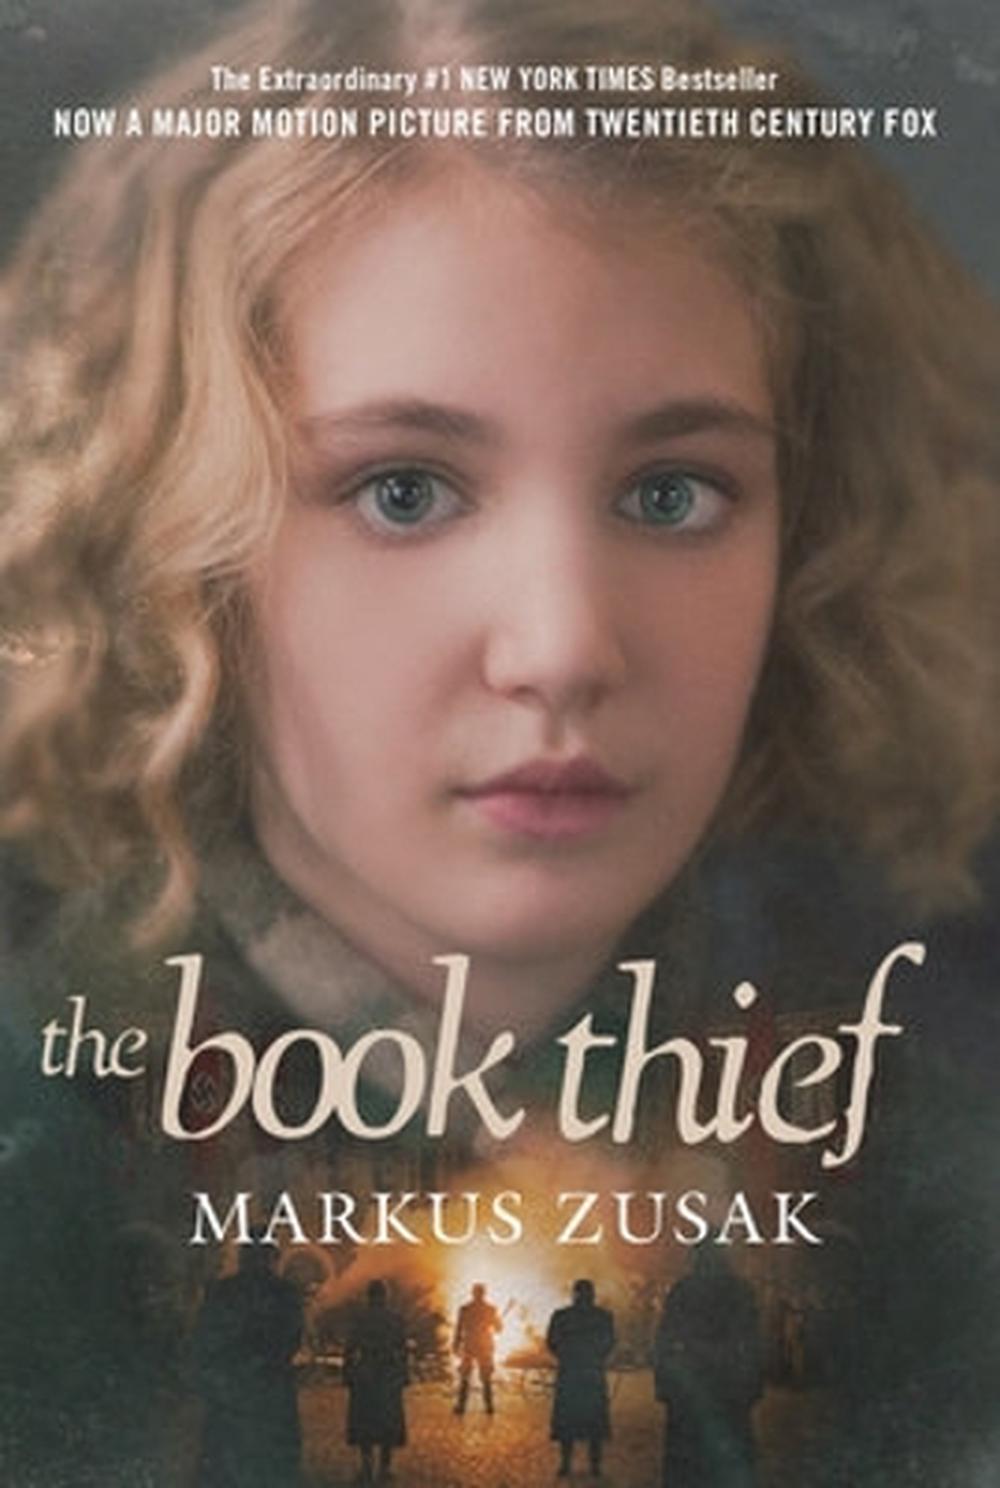 book thief movie